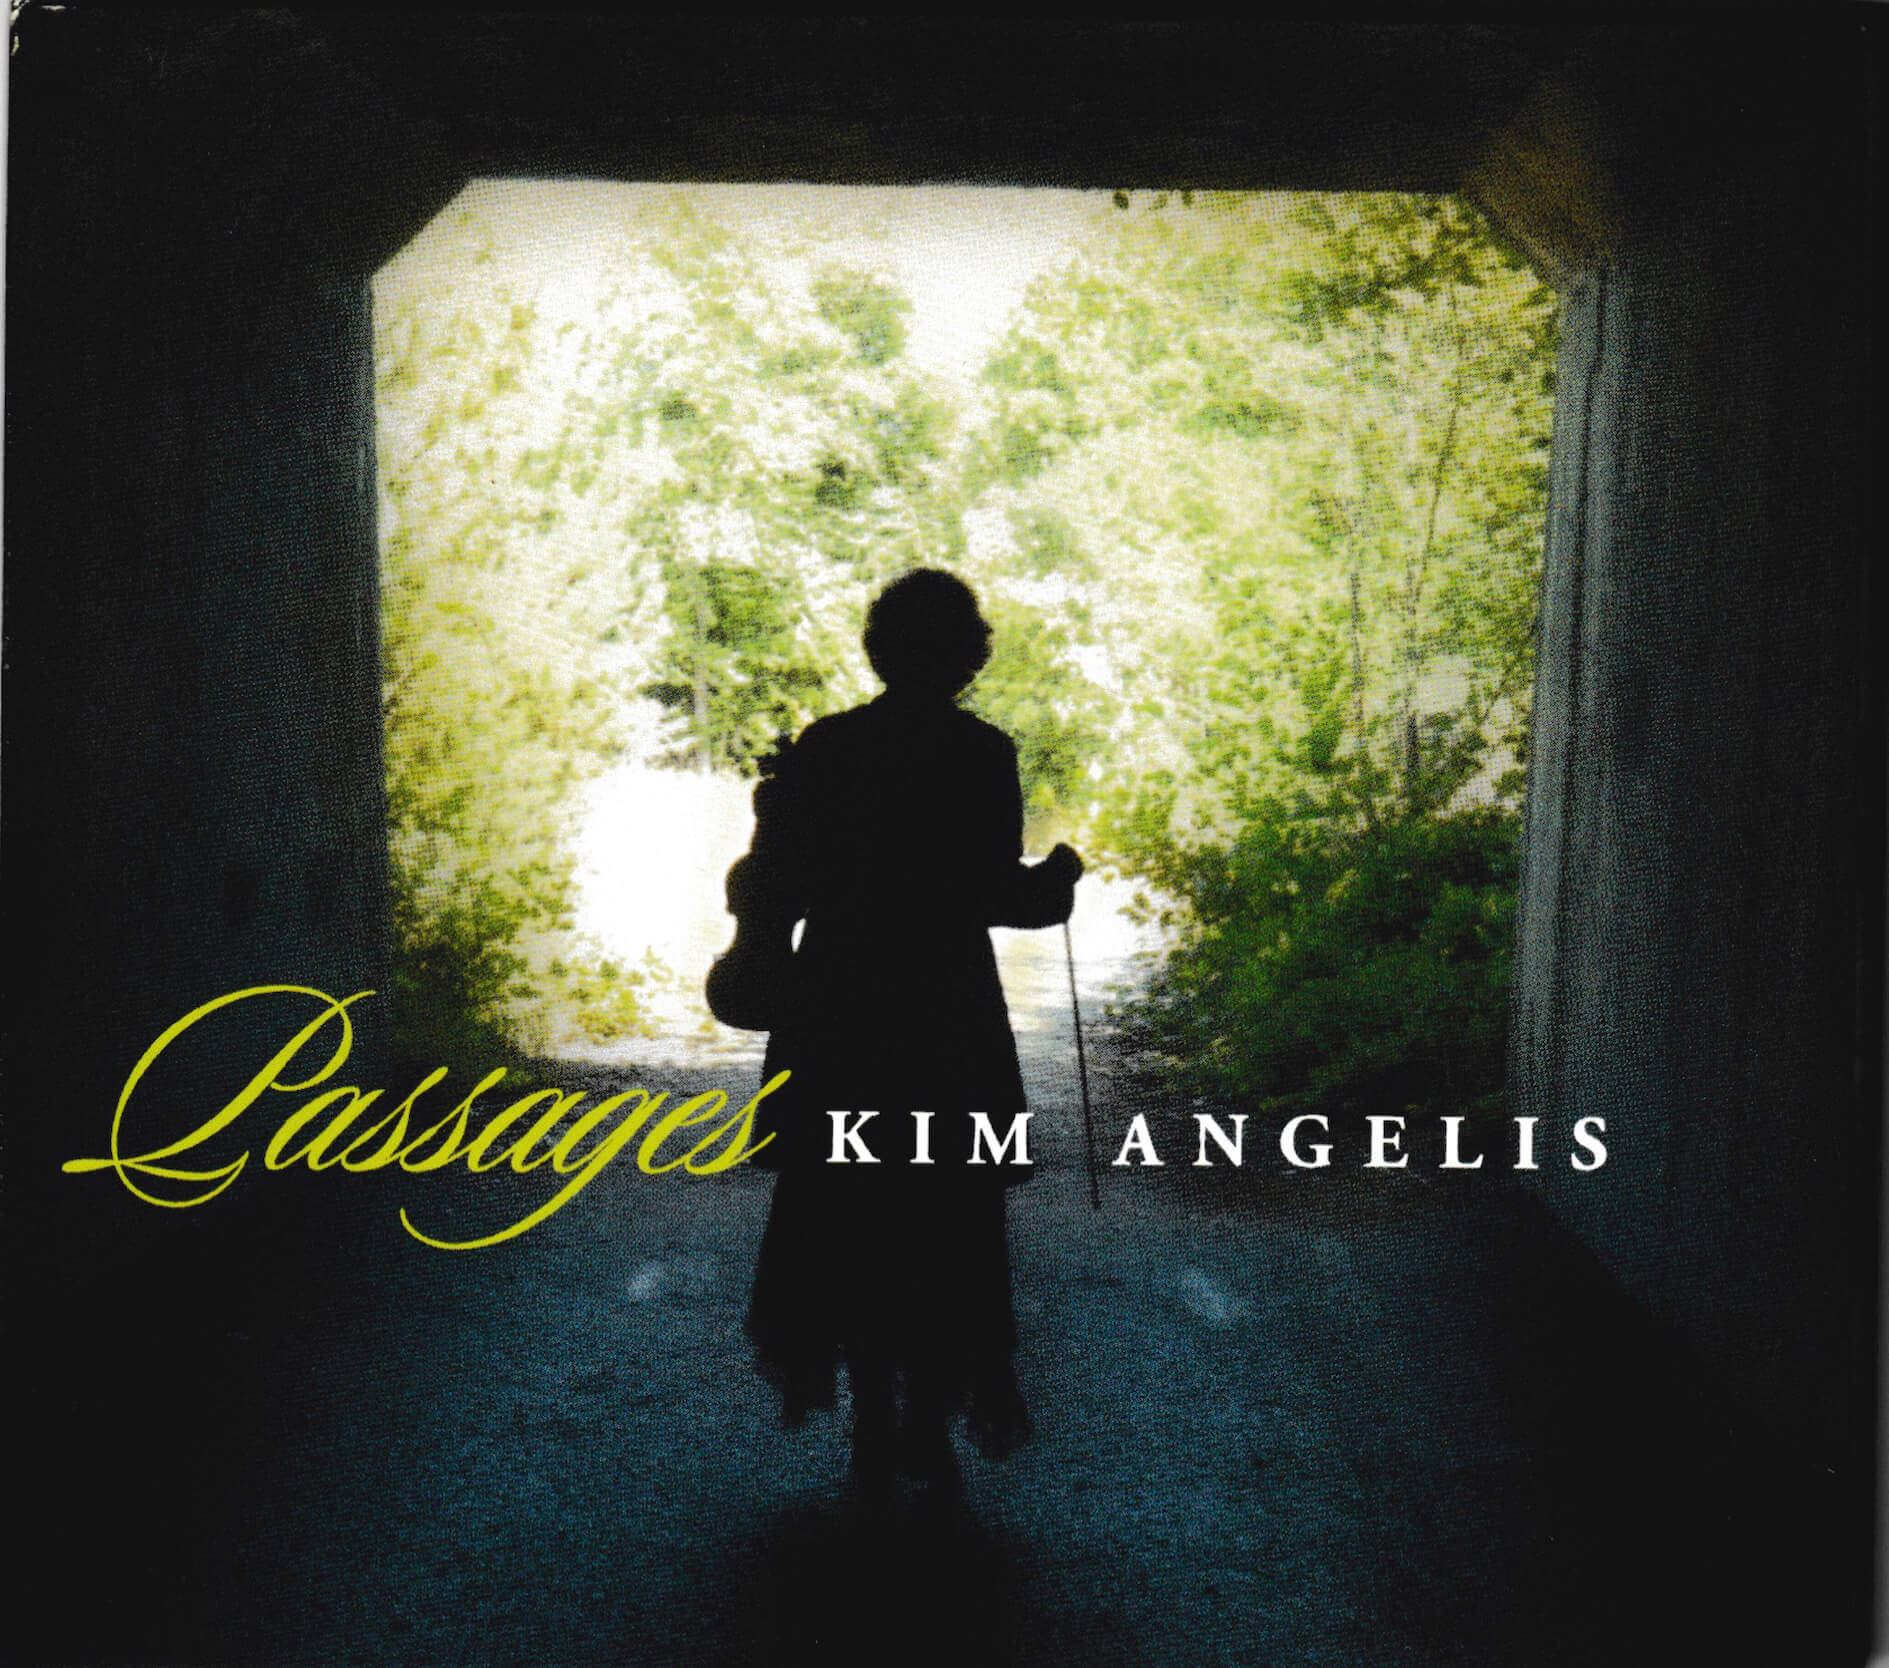 Triumphant soulful violin beauty Kim Angelis